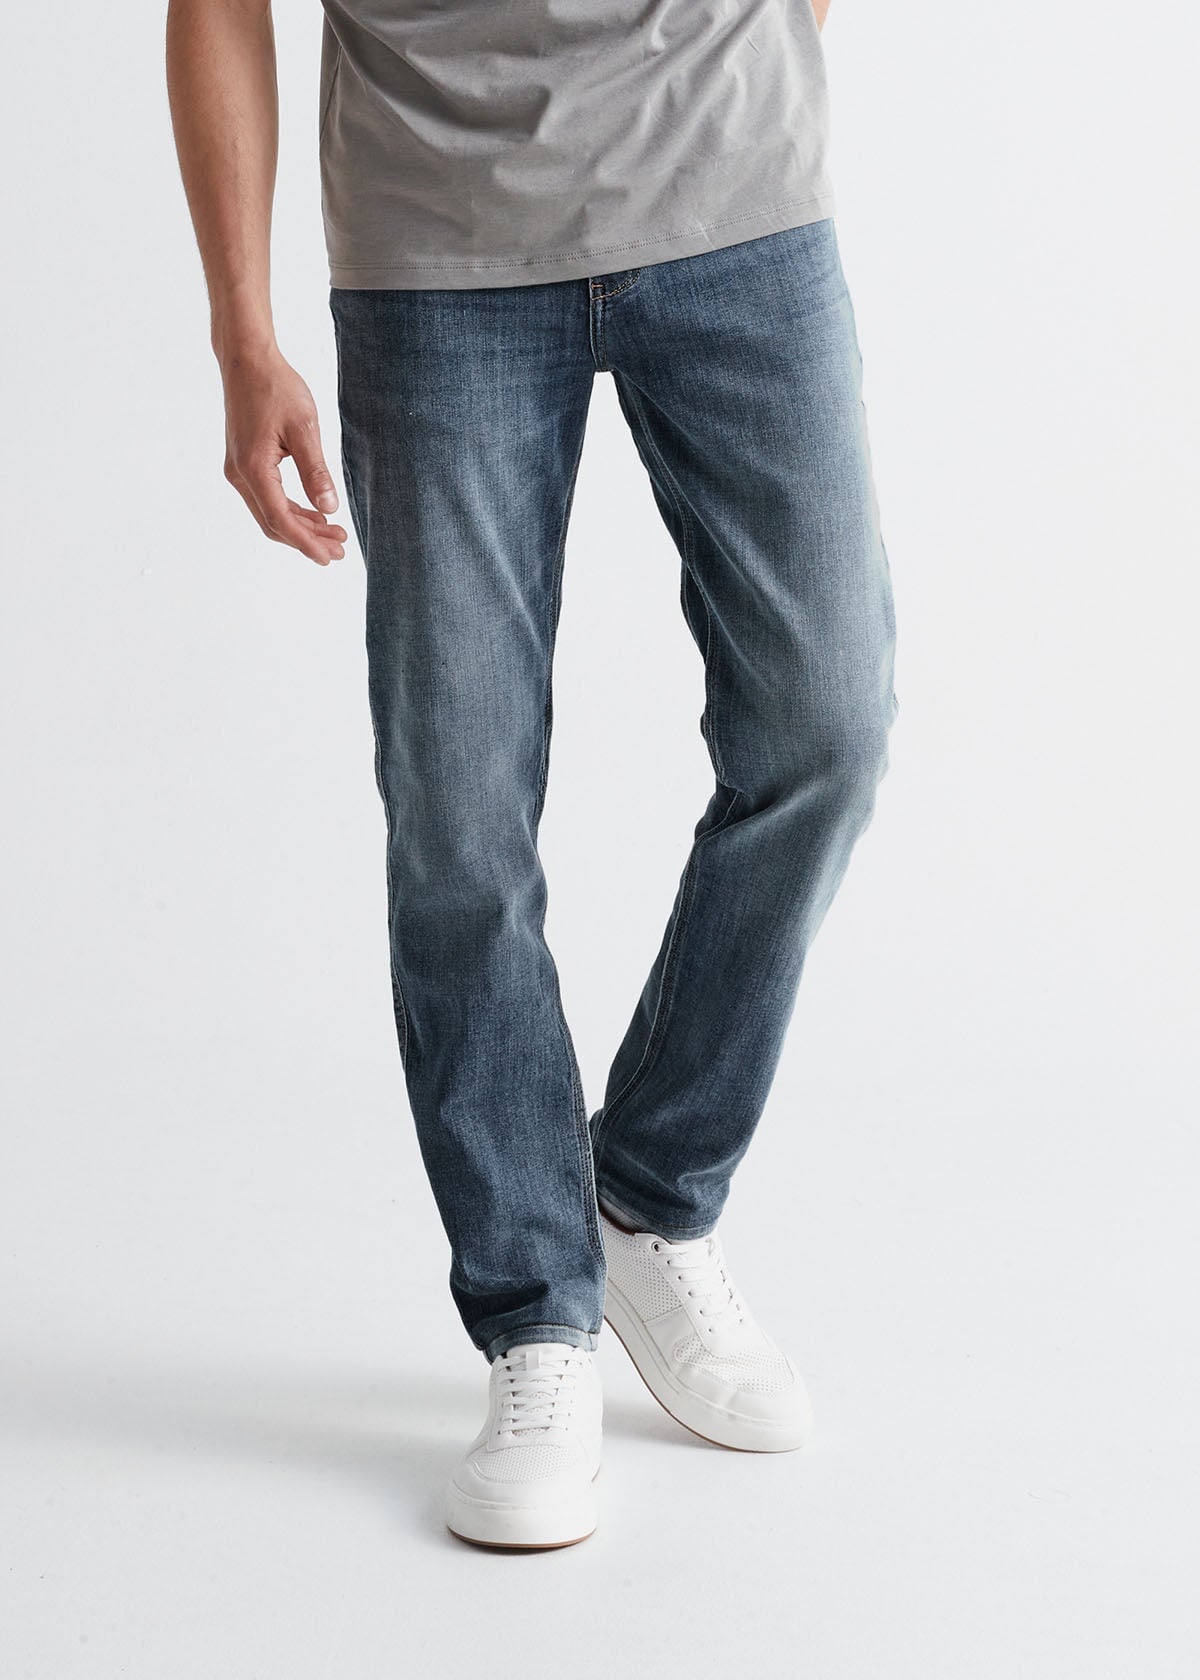  Men's Stretch Waist Jeans